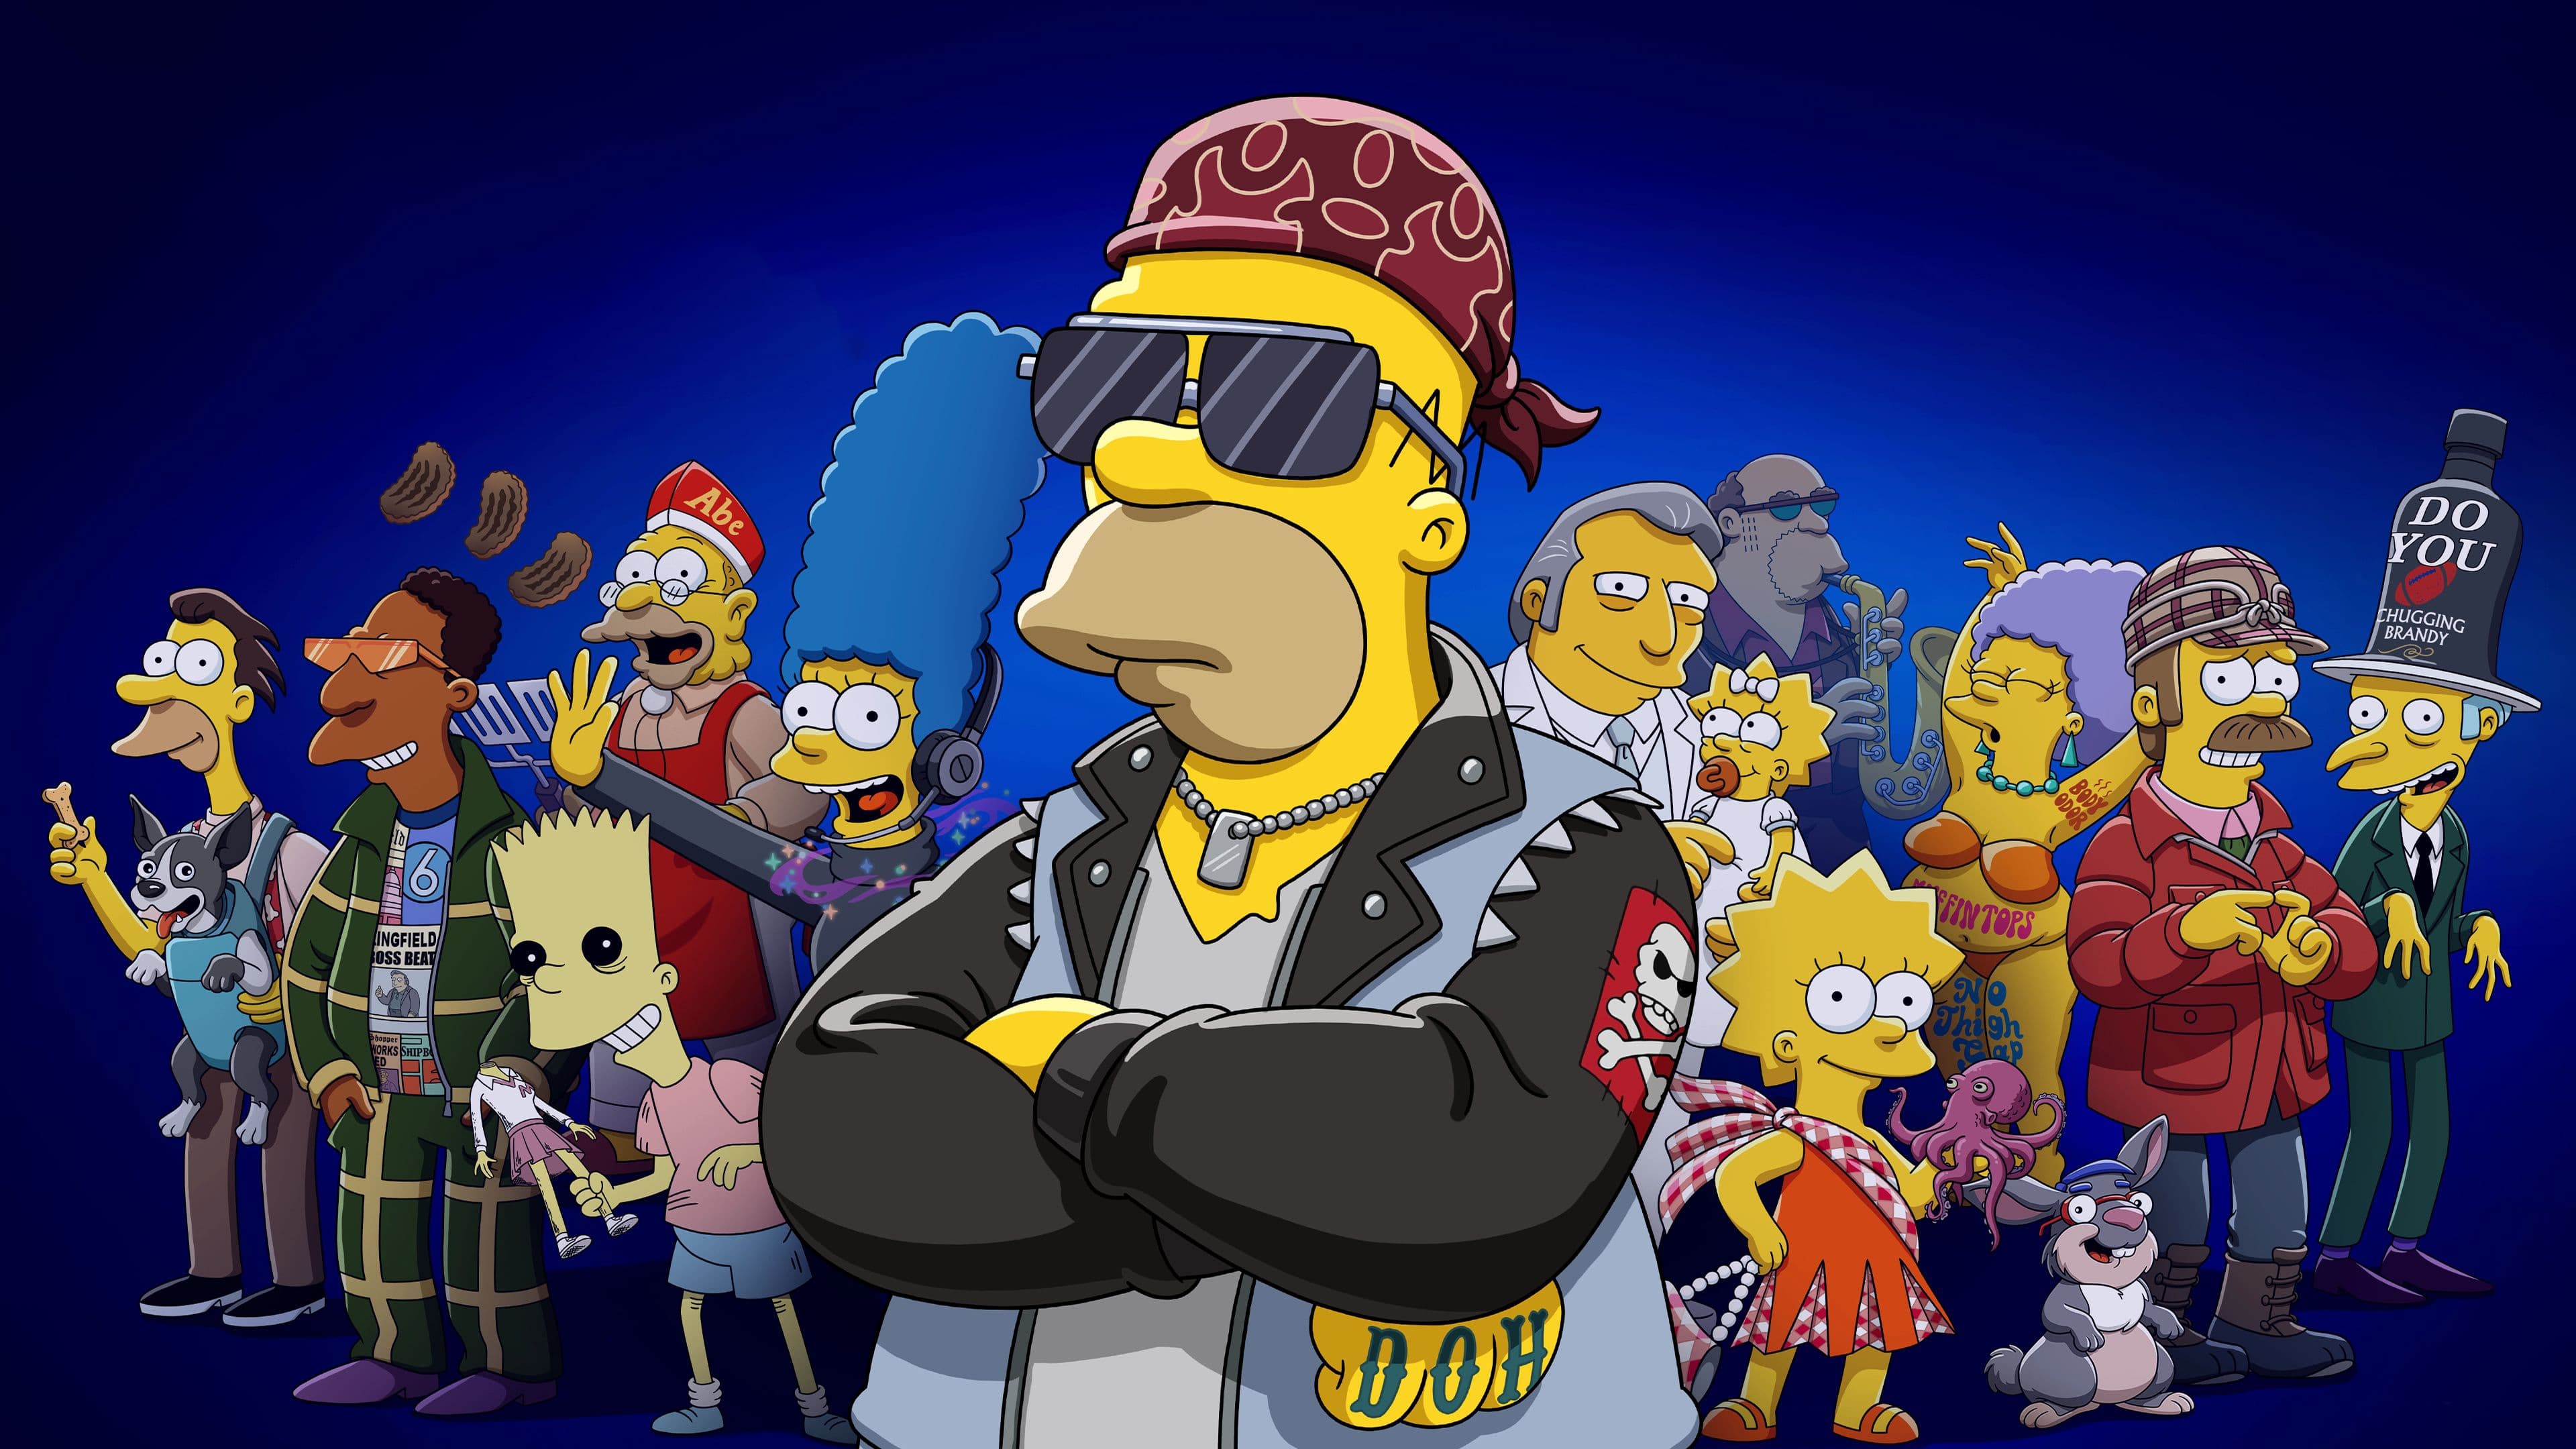 The Simpsons - Season 6